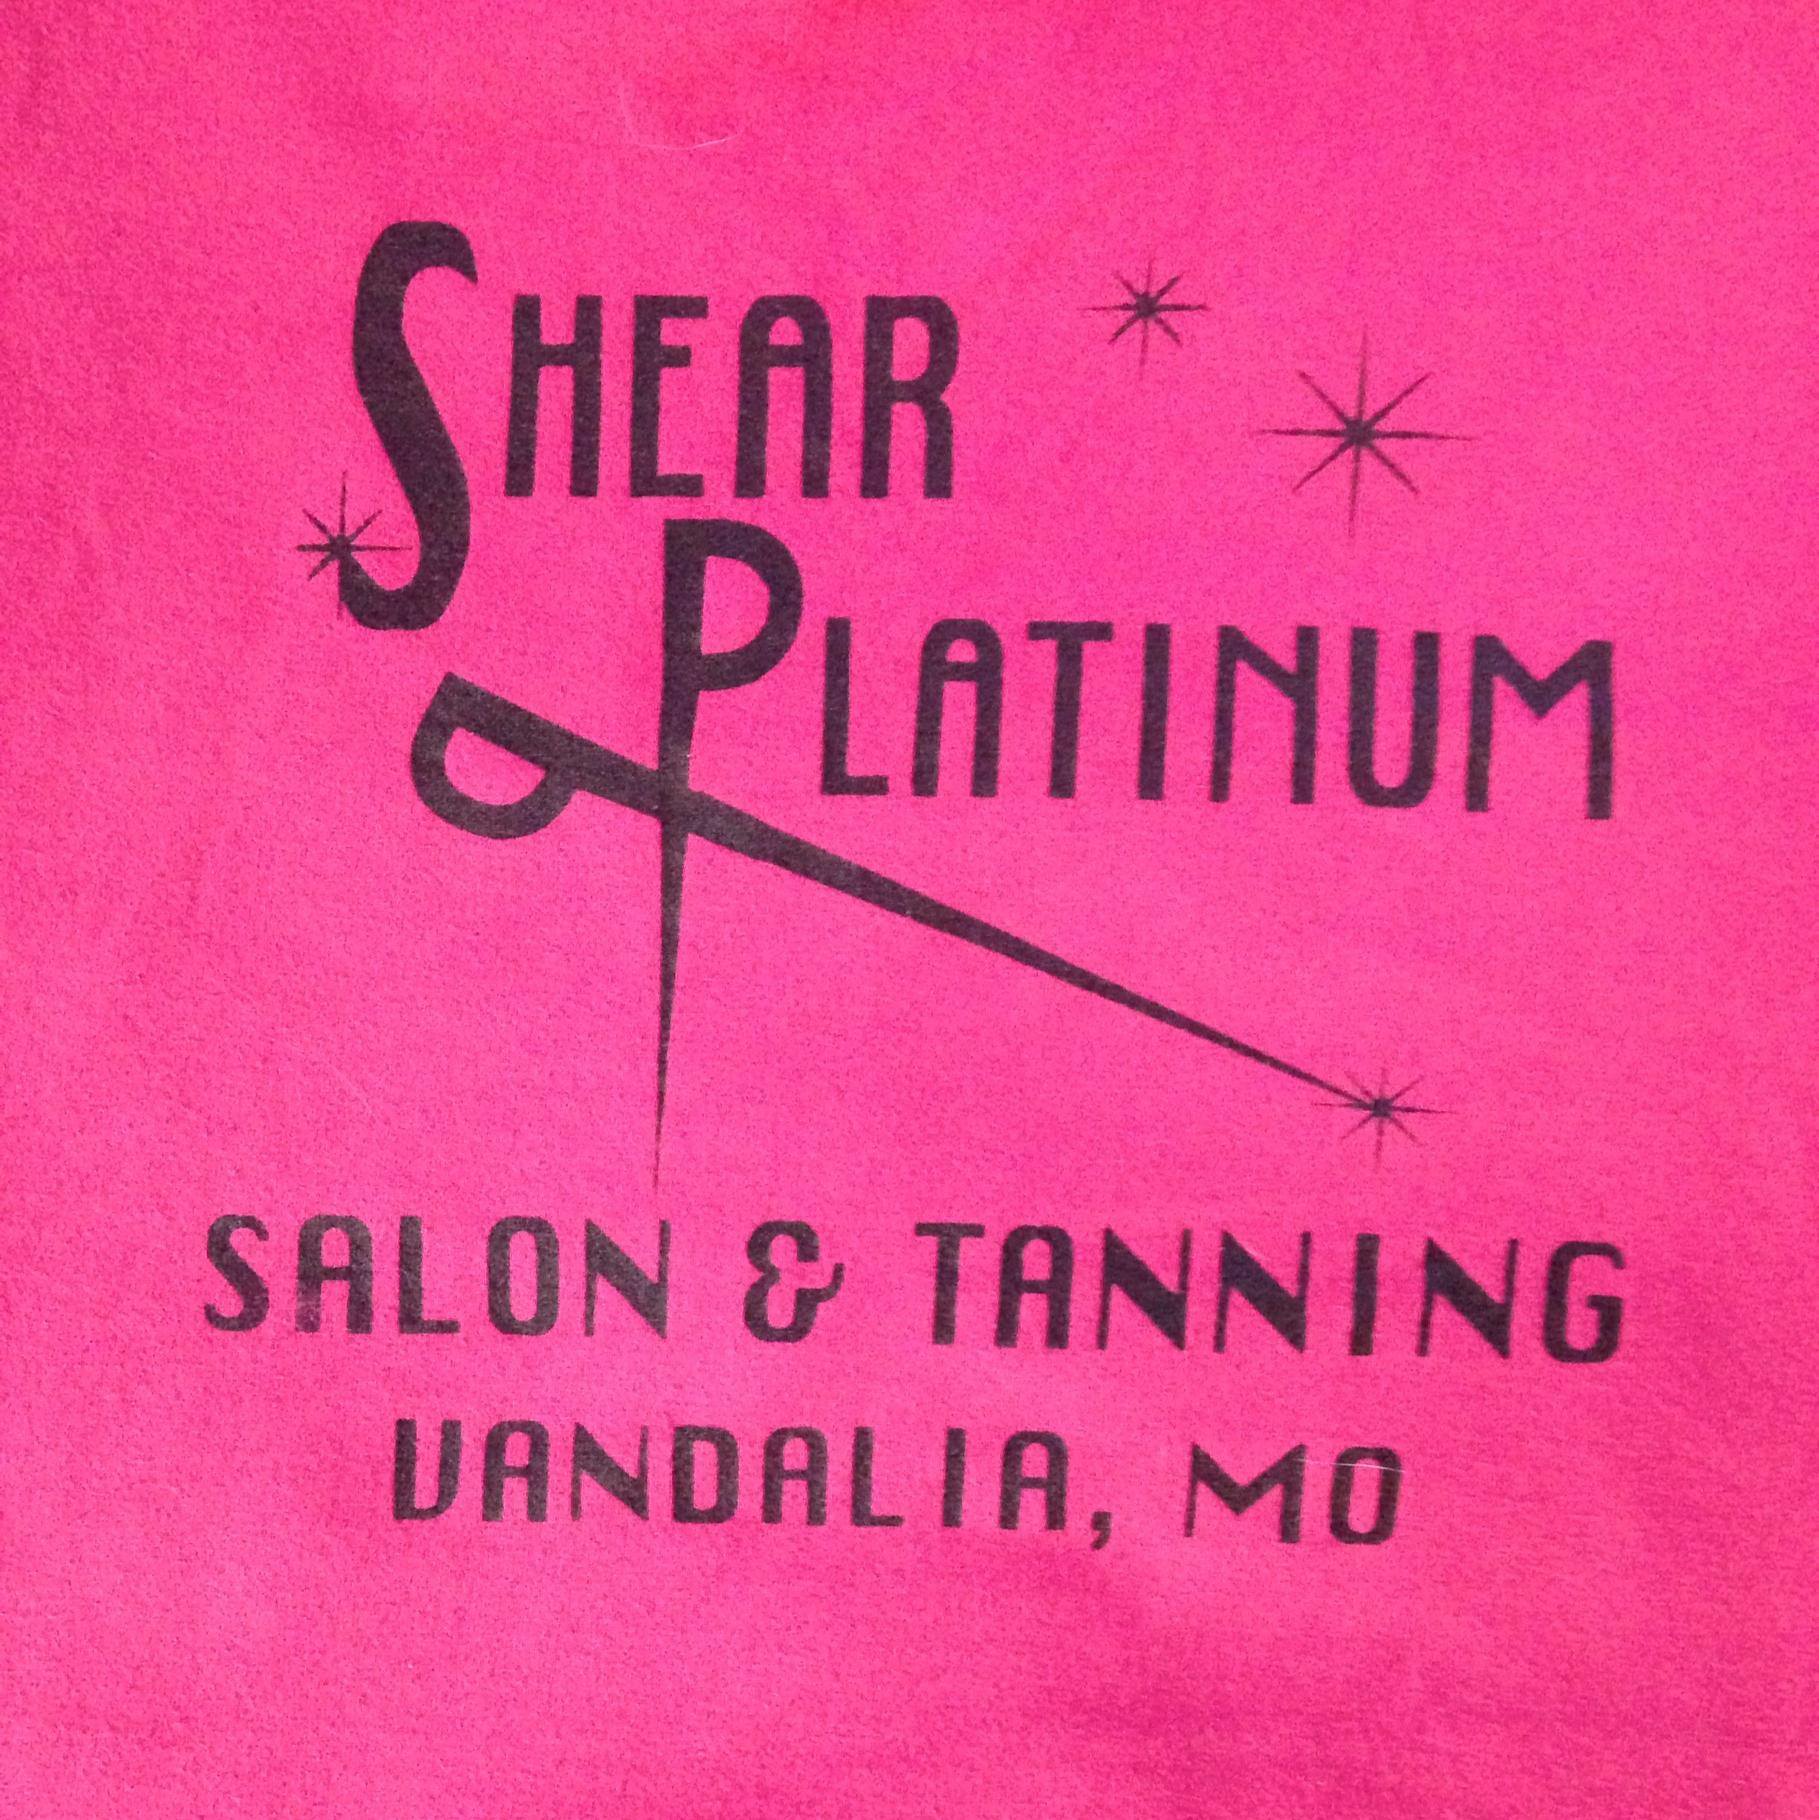 Shear Platinum 1555 US-54 #40, Vandalia Missouri 63382